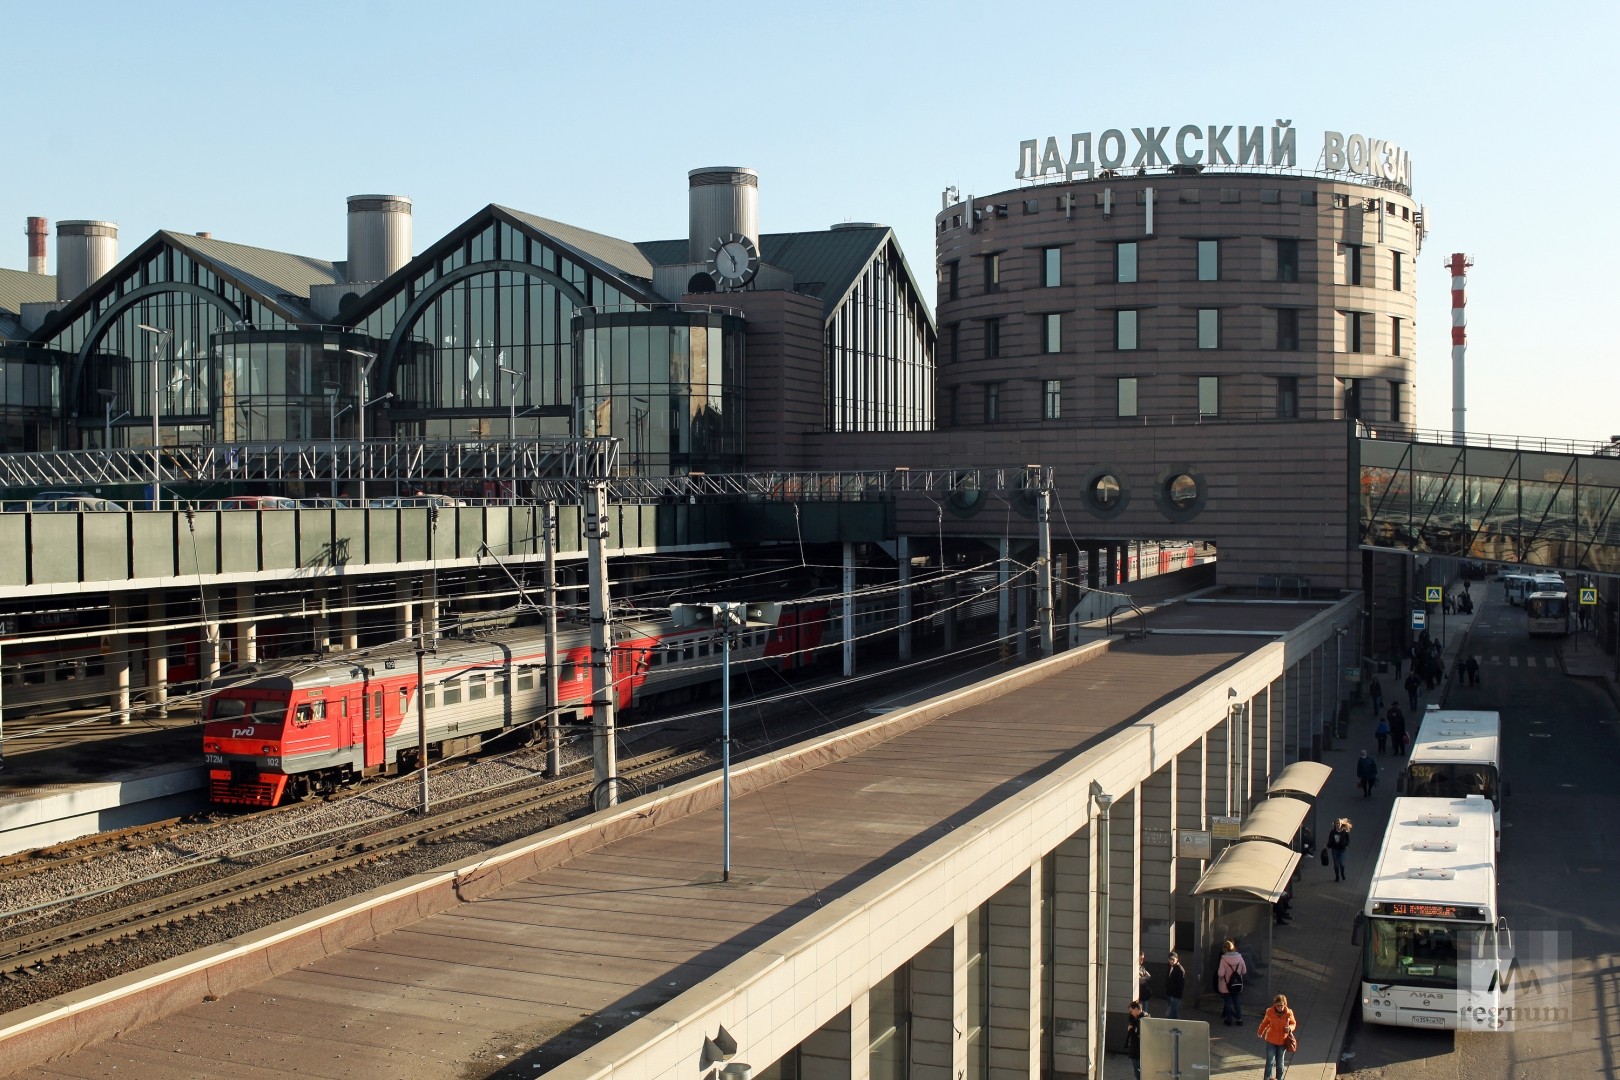 Ладожский вокзал Санкт-Петербург 2020